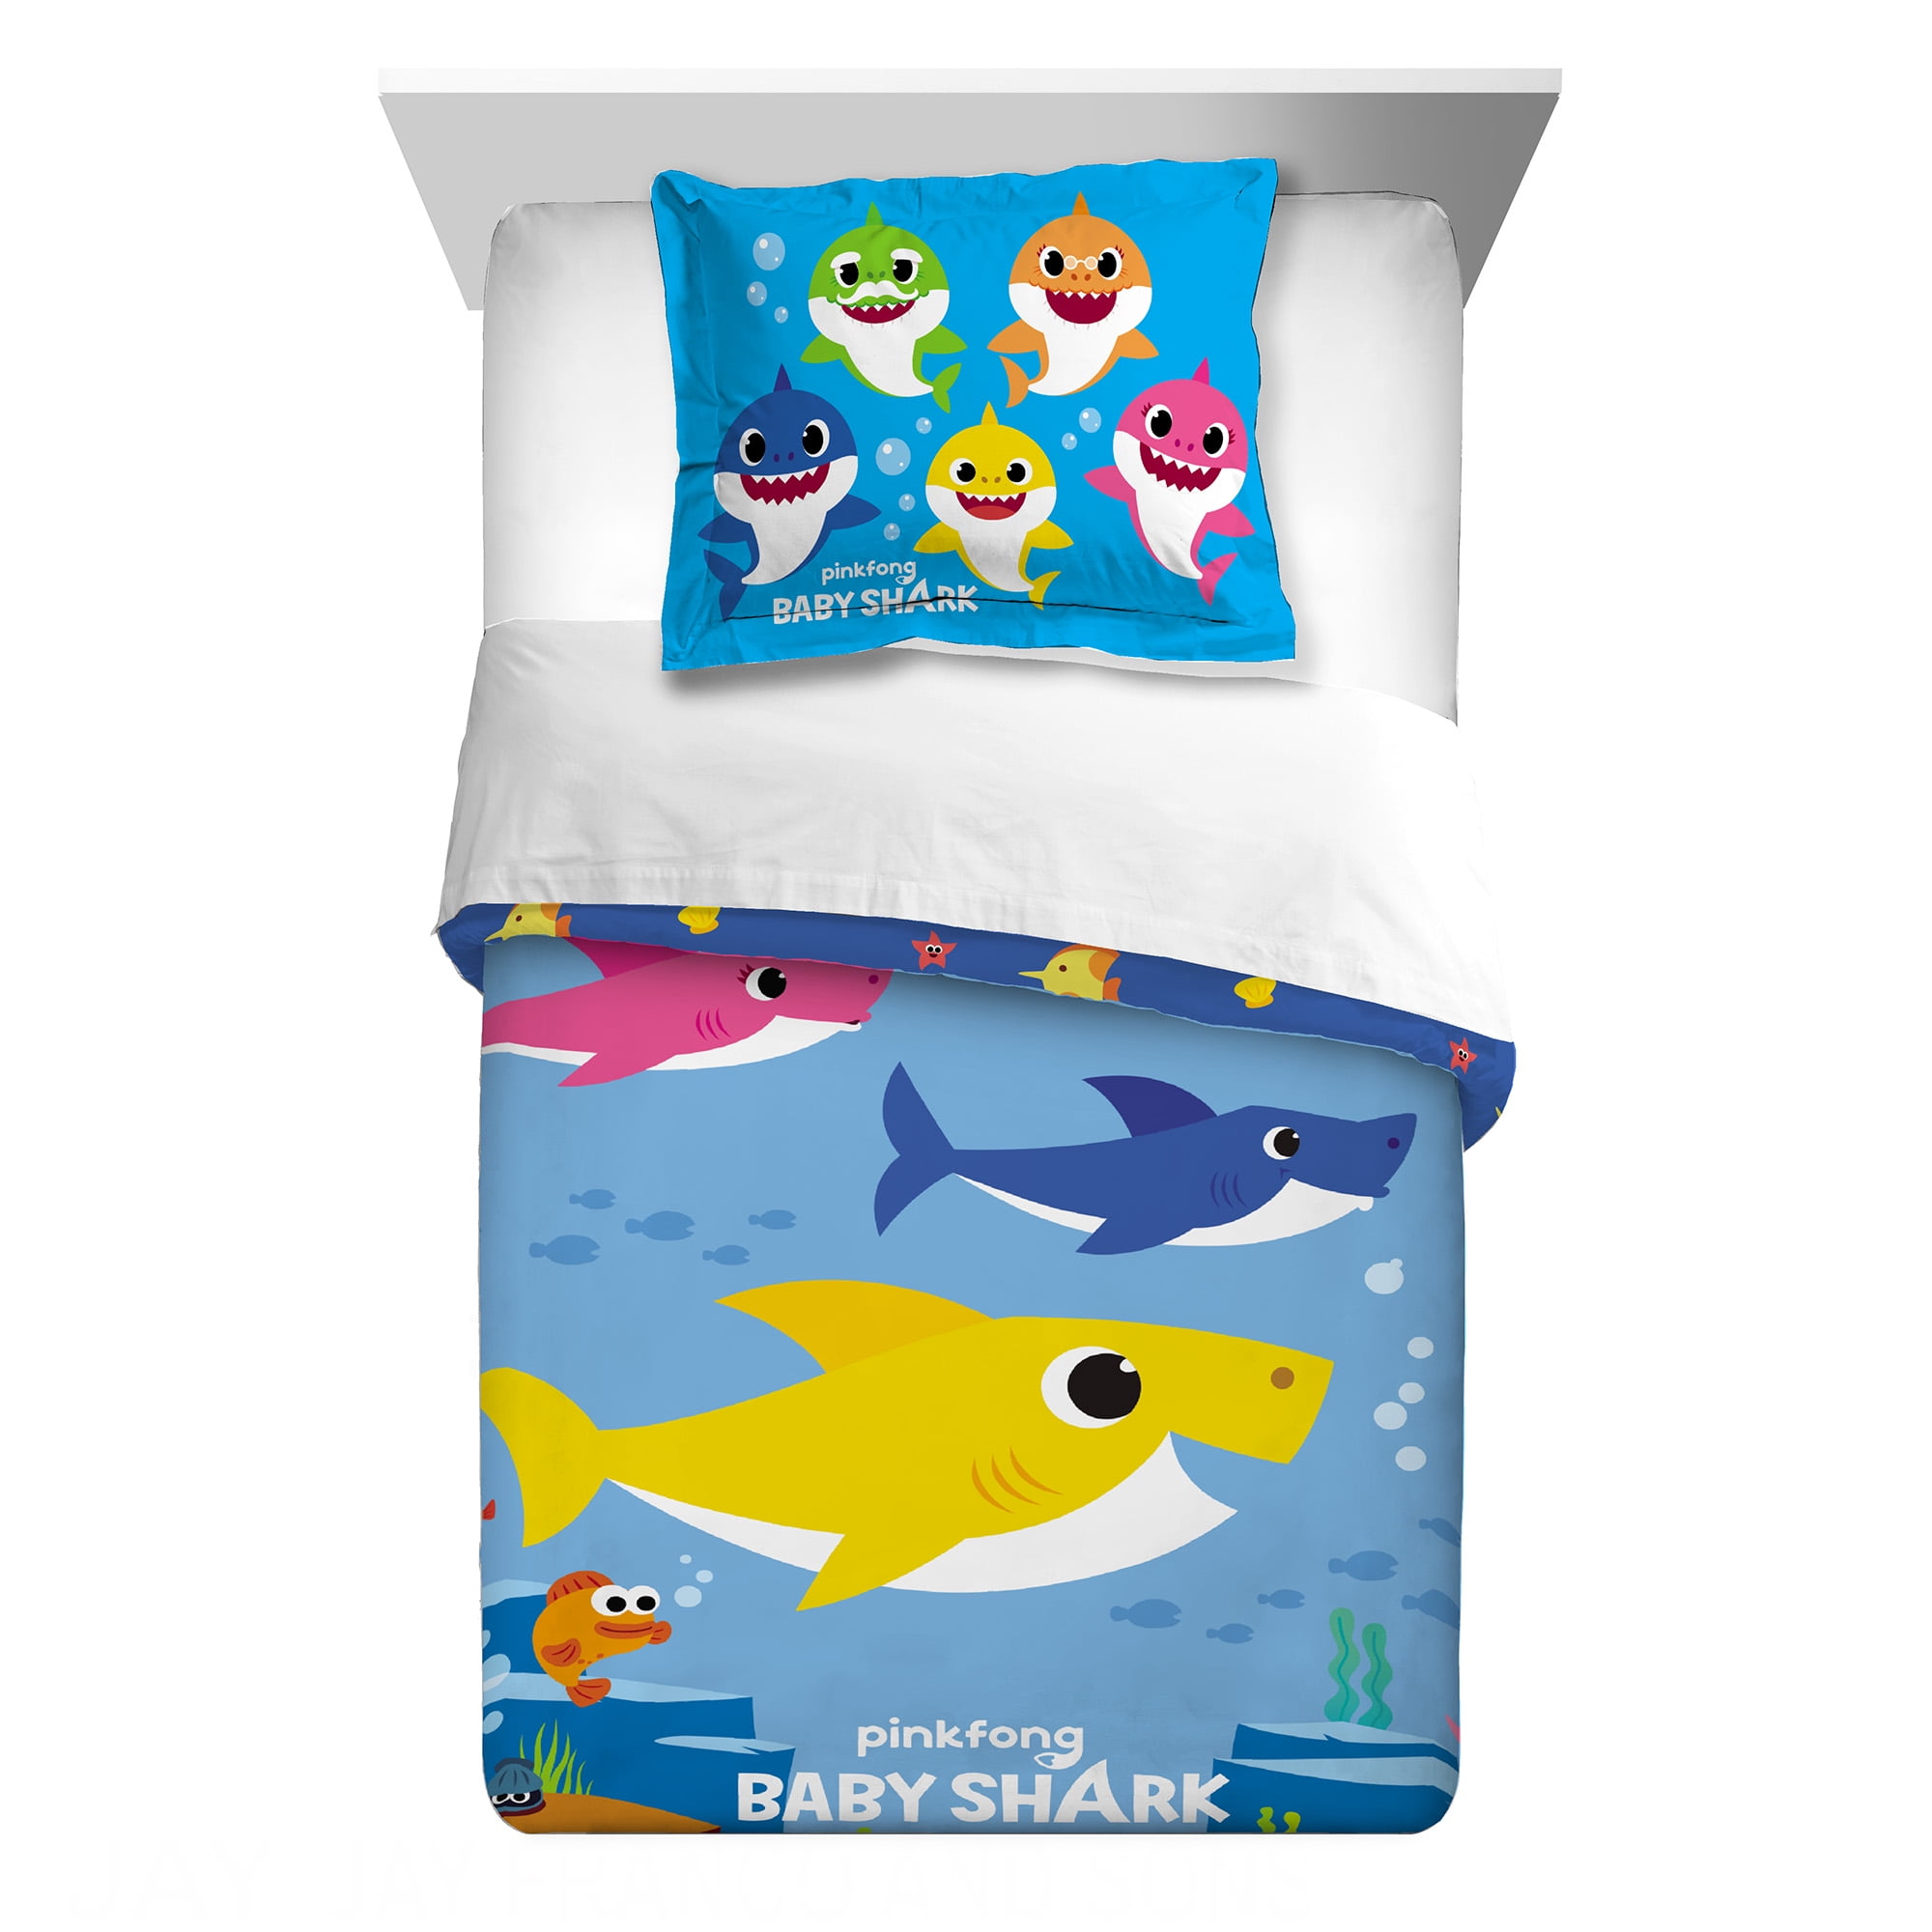 Baby Shark 2 Piece Comforter And Sham, Shark Bedding Twin